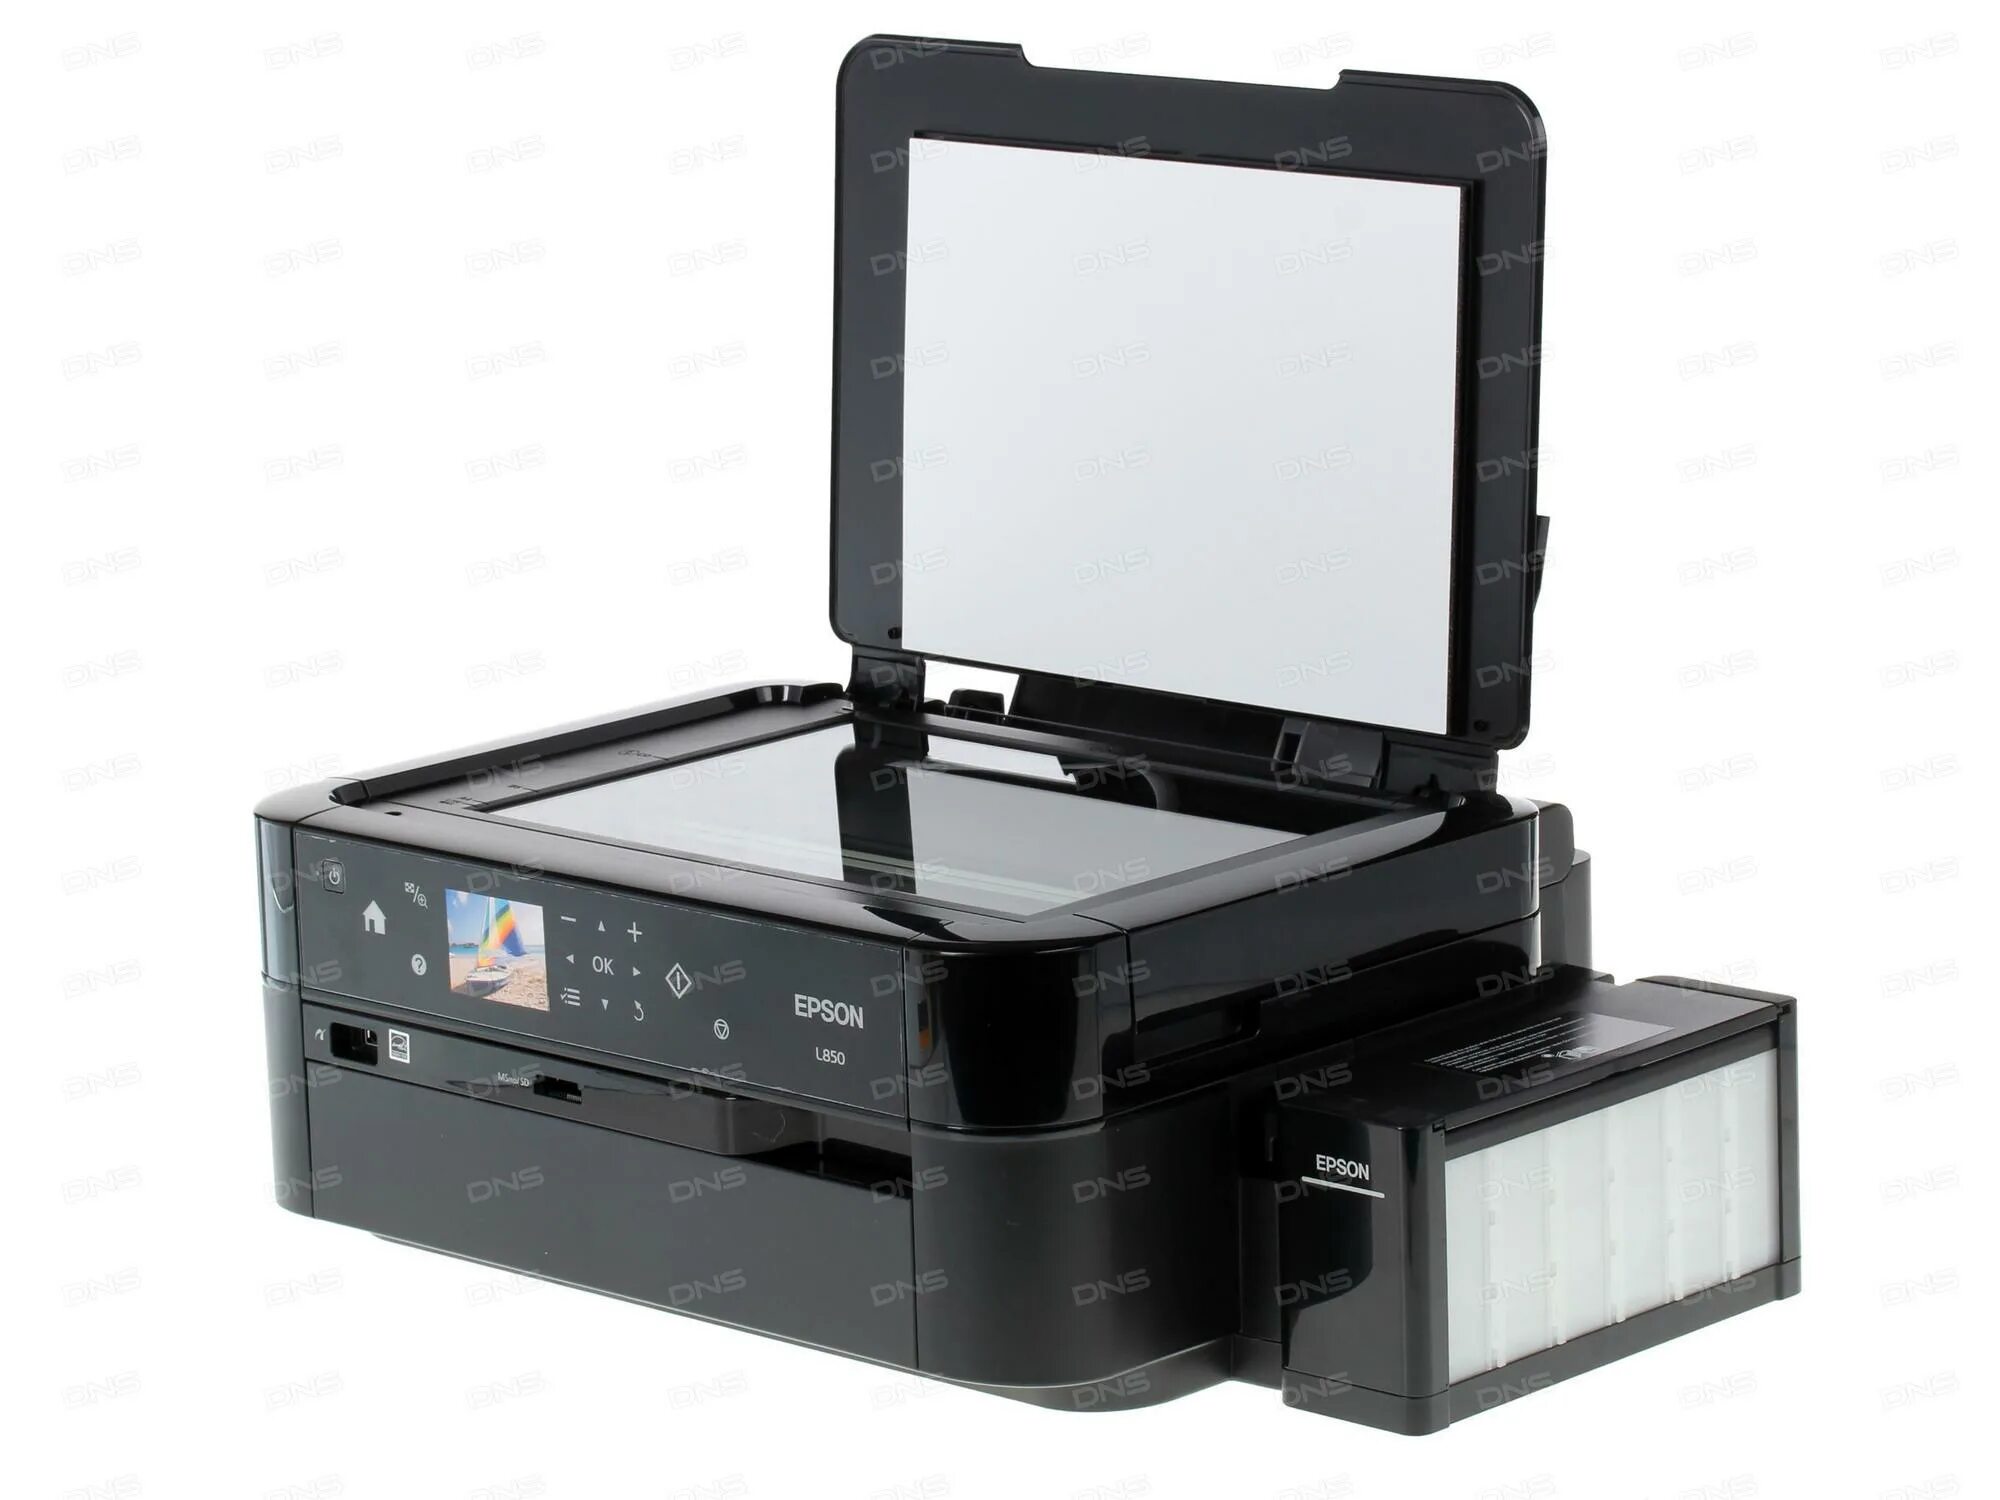 Epson l850. МФУ струйный Epson l850. Эпсон 850 МФУ. Сканер-принтер-копир Эпсон л 850. Epson l850 a3.